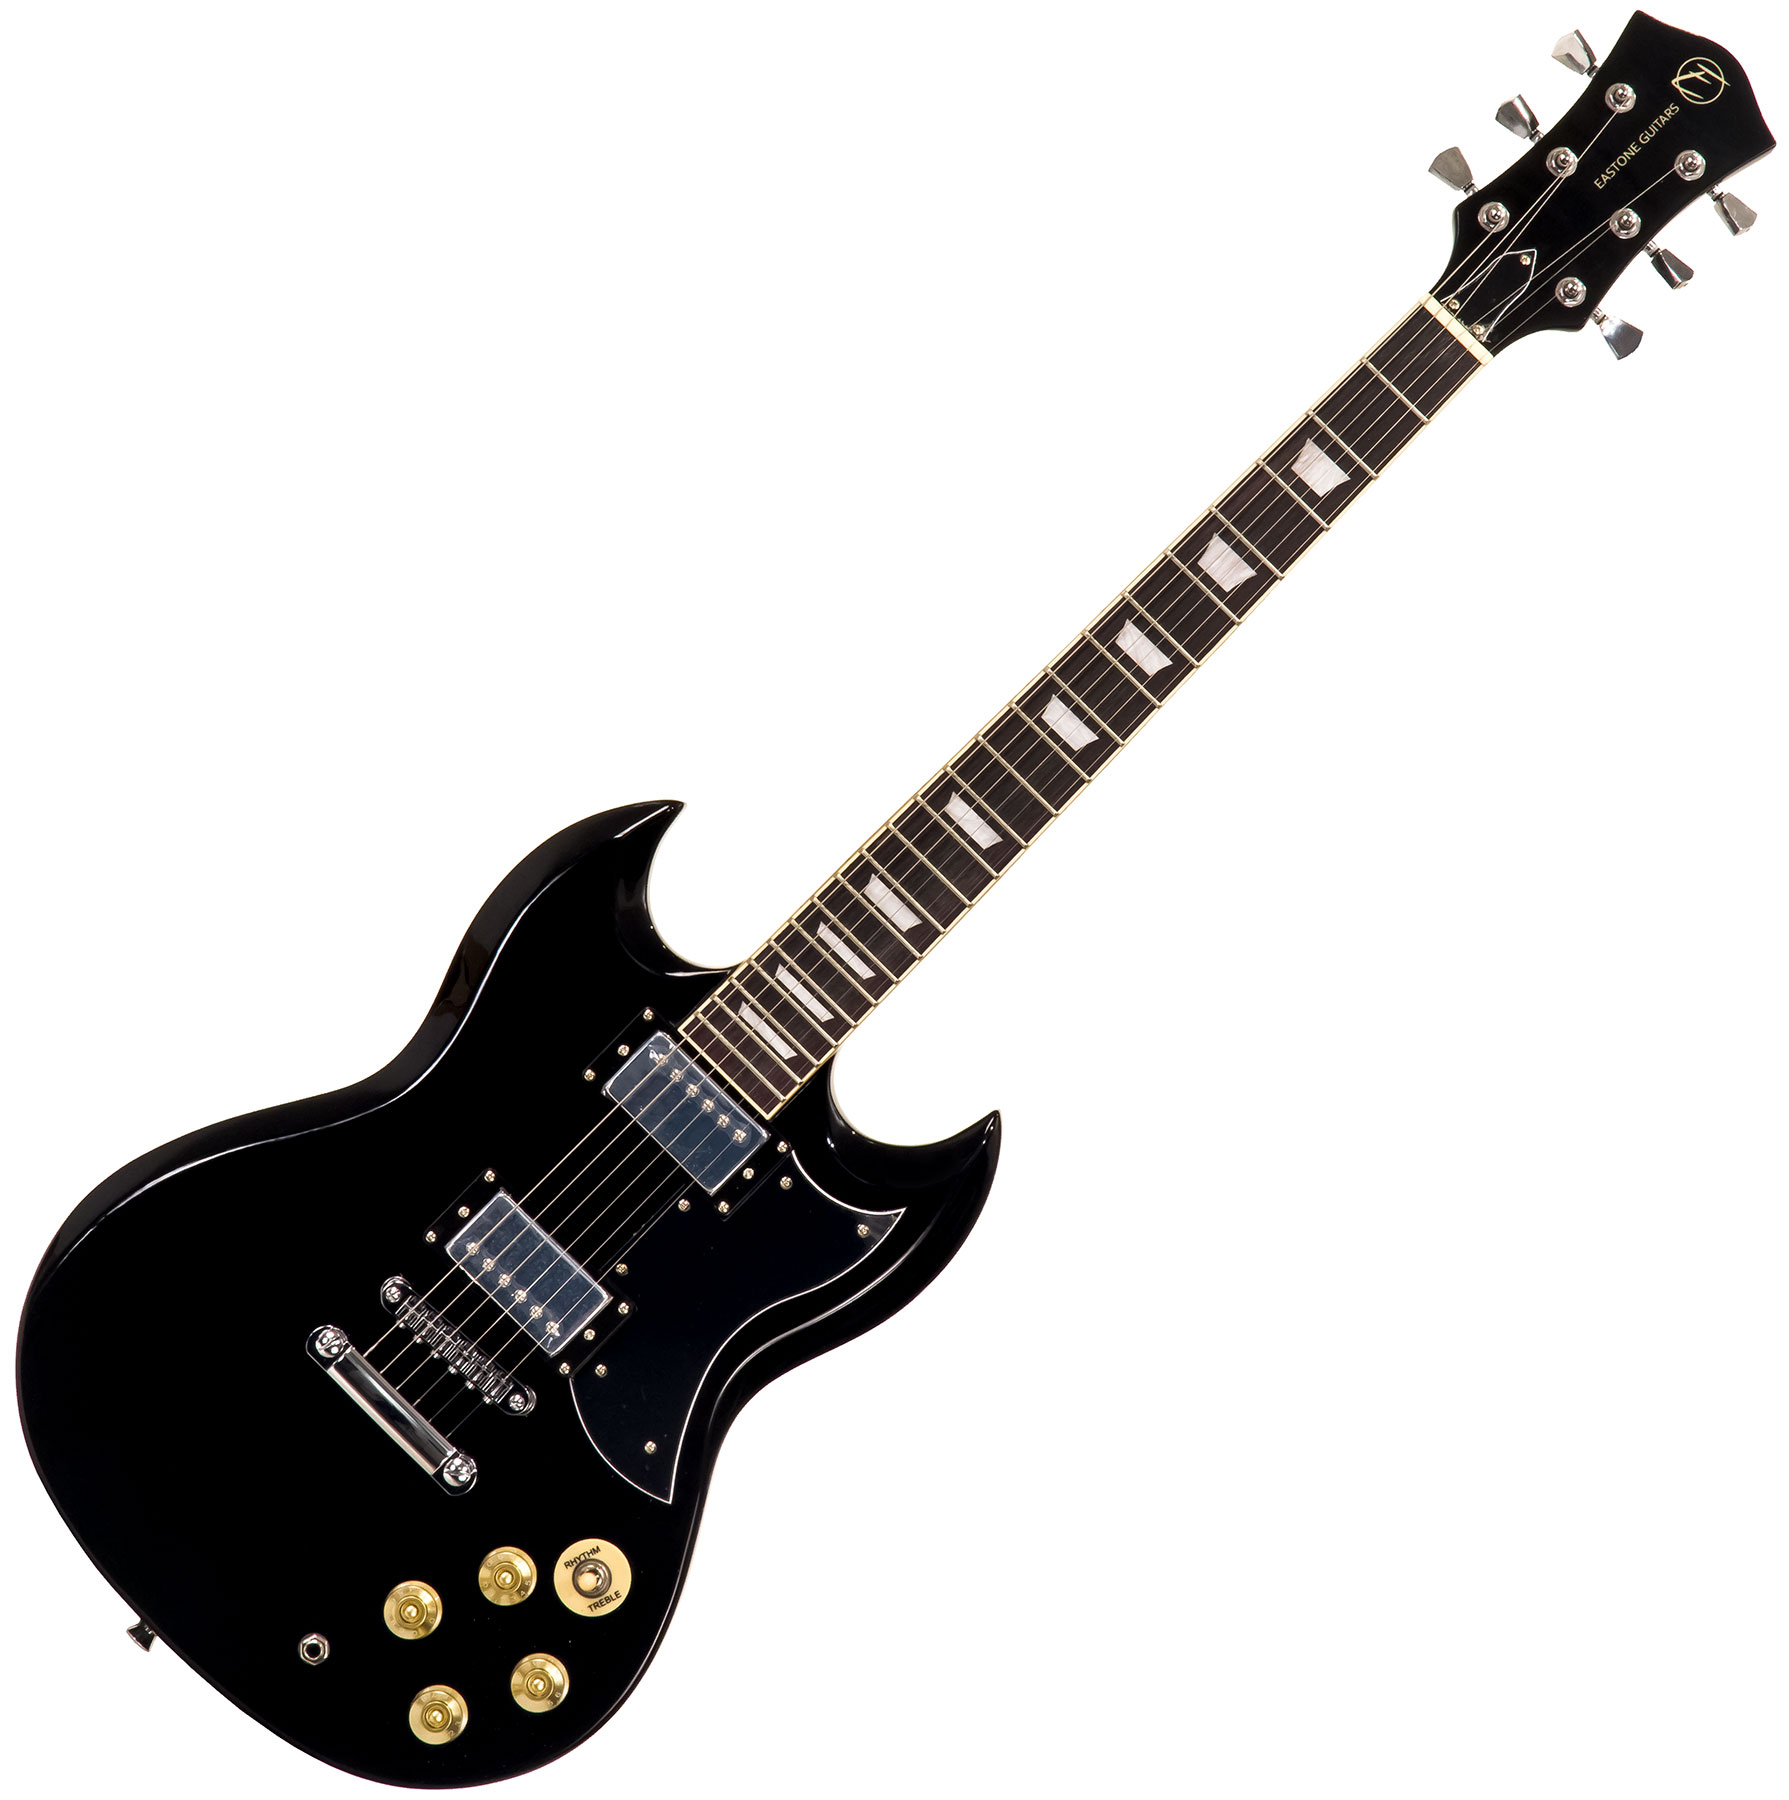 Eastone Sdc70 +marshall Mg10g Gold +cable +housse +courroie +mediators - Black - Elektrische gitaar set - Variation 1